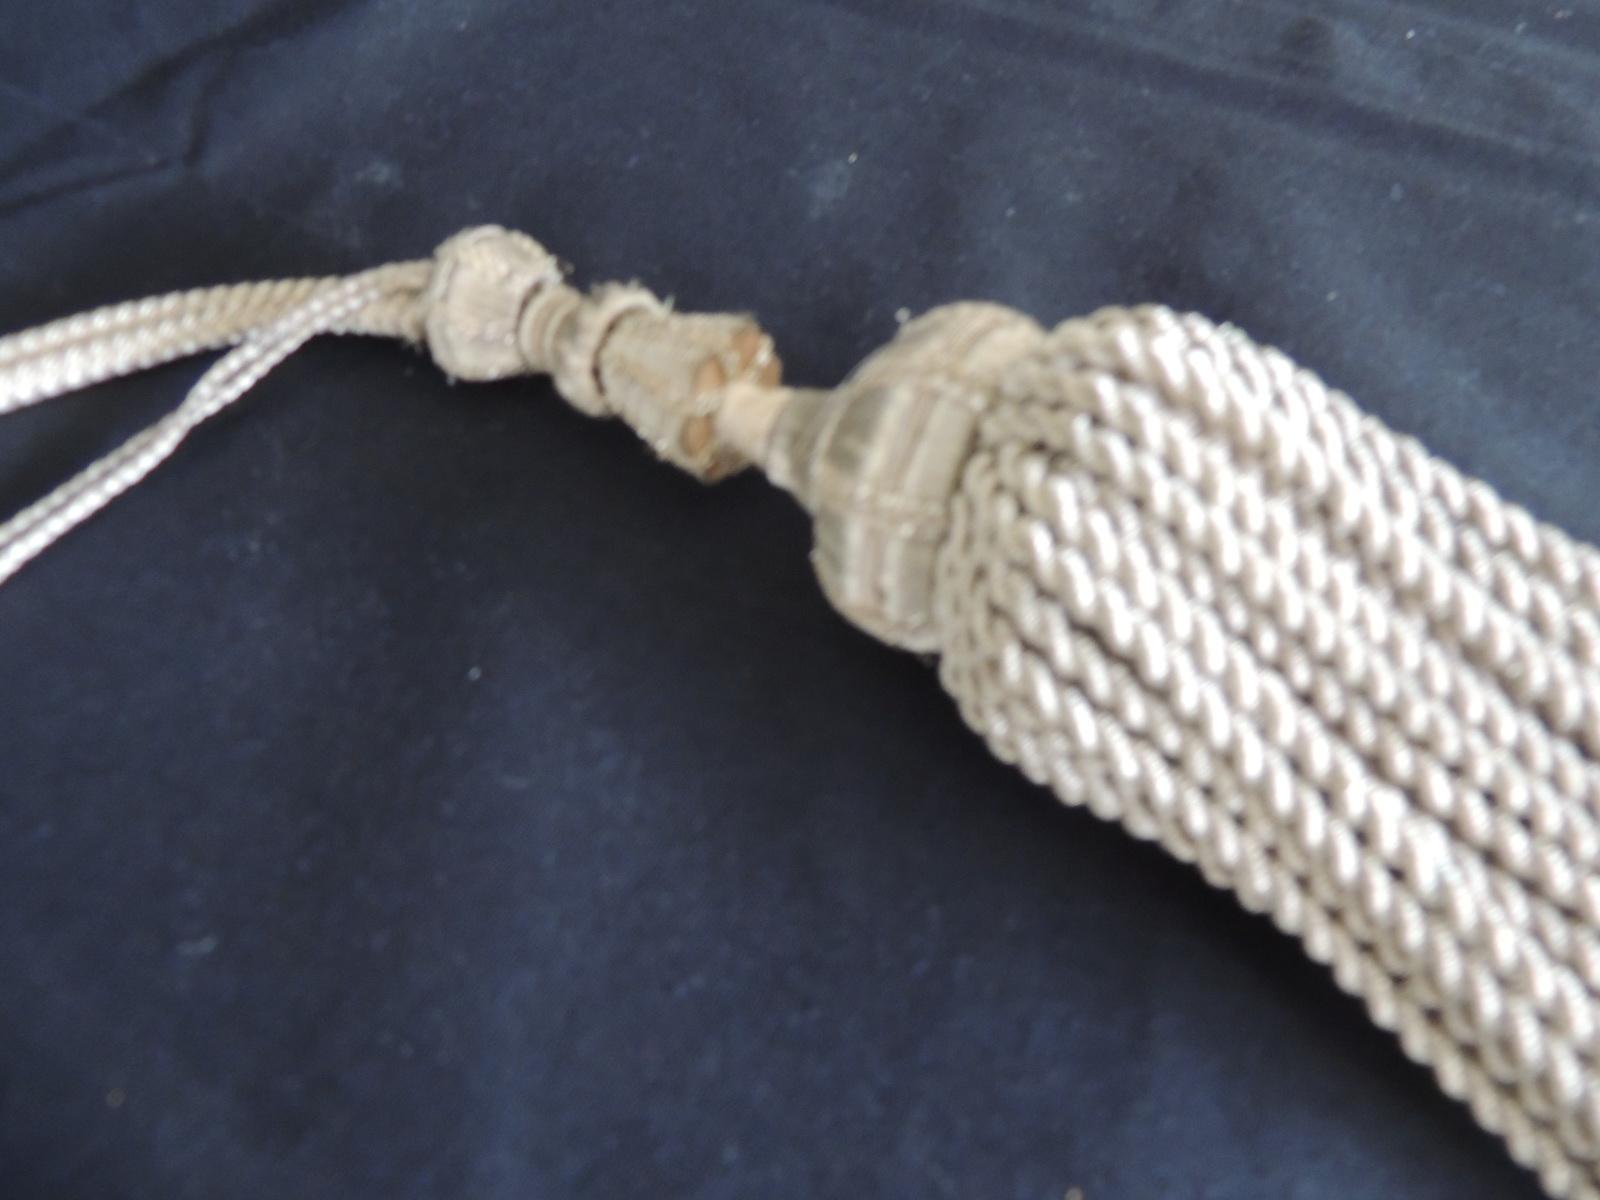 Vintage silver metallic threads long decorative tassel.
Hand twisted.
Size: 14